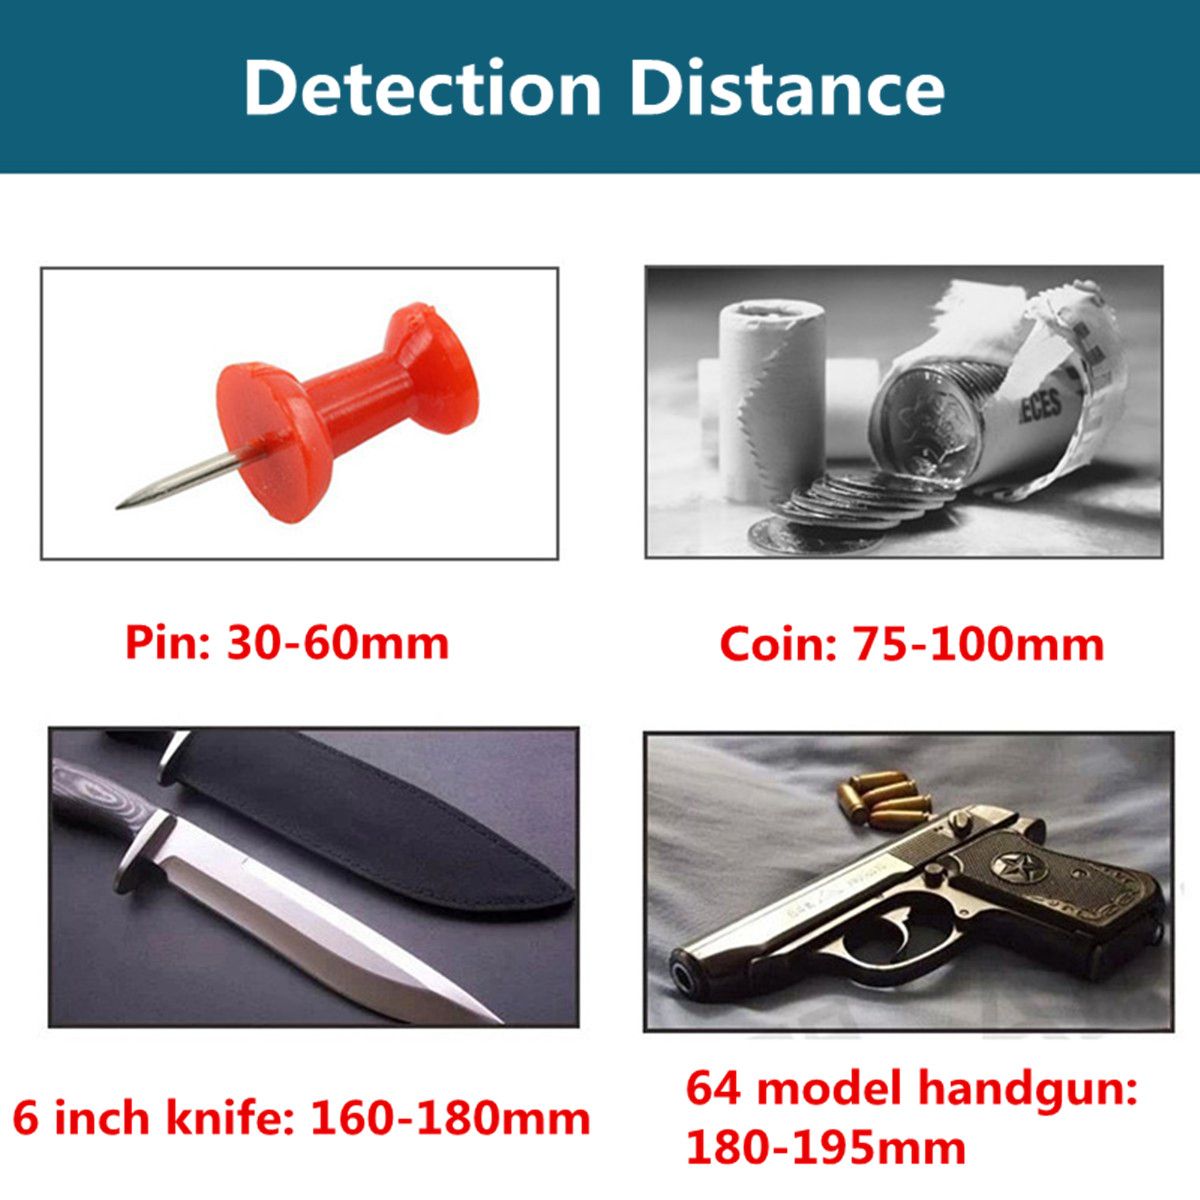 Handheld-Security-Metal-Detector-Wand-High-Sensitivity-Exhibition-Scanner-1208438